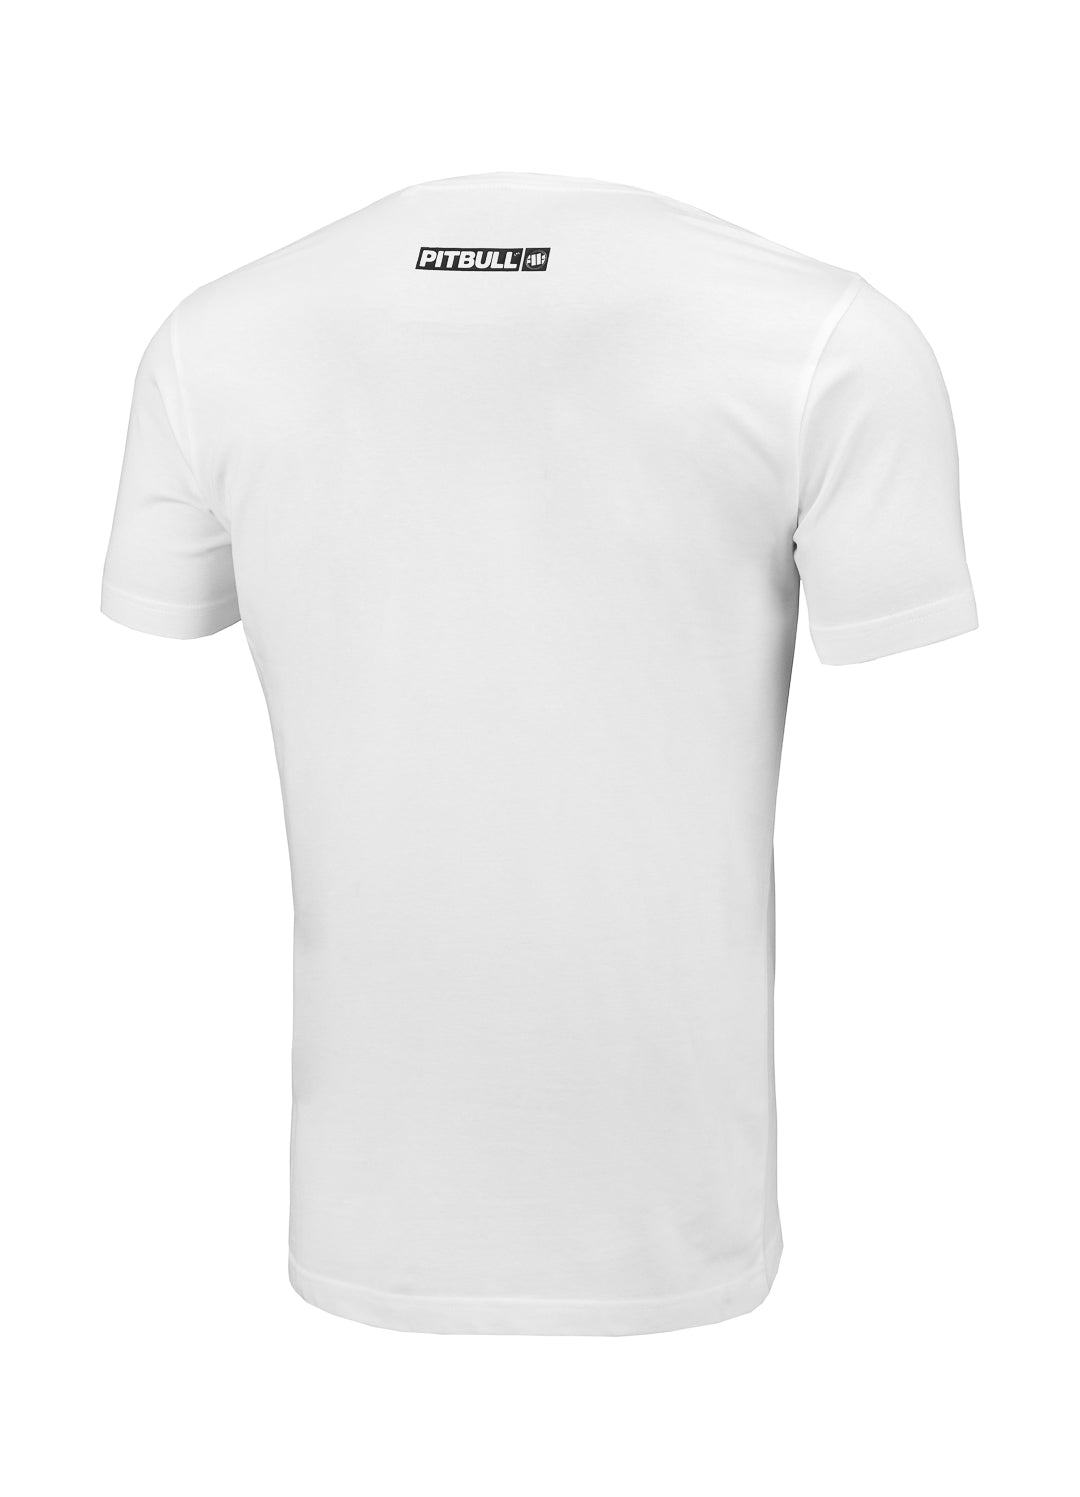 HILLTOP Slim Fit T-shirt White